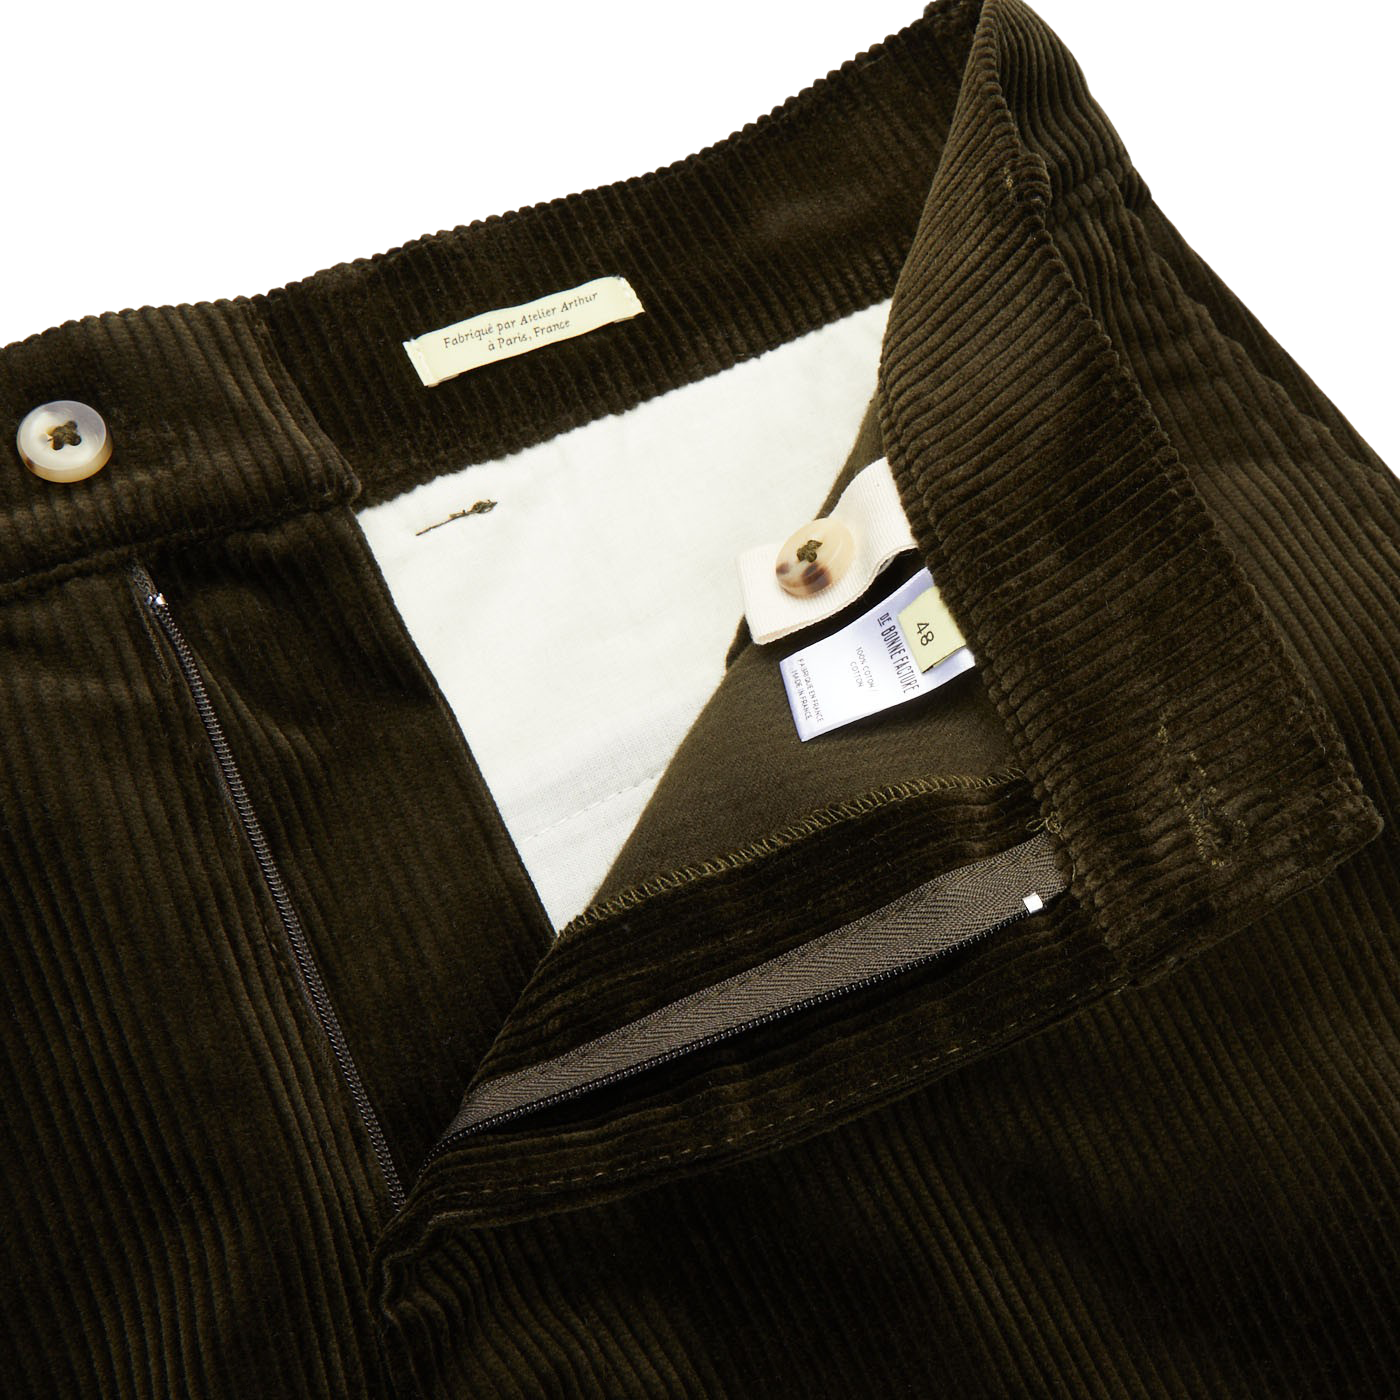 De Bonne Facture Dark Olive Cotton Corduroy Balloon Trousers with a zipper, made of heavy cotton corduroy.